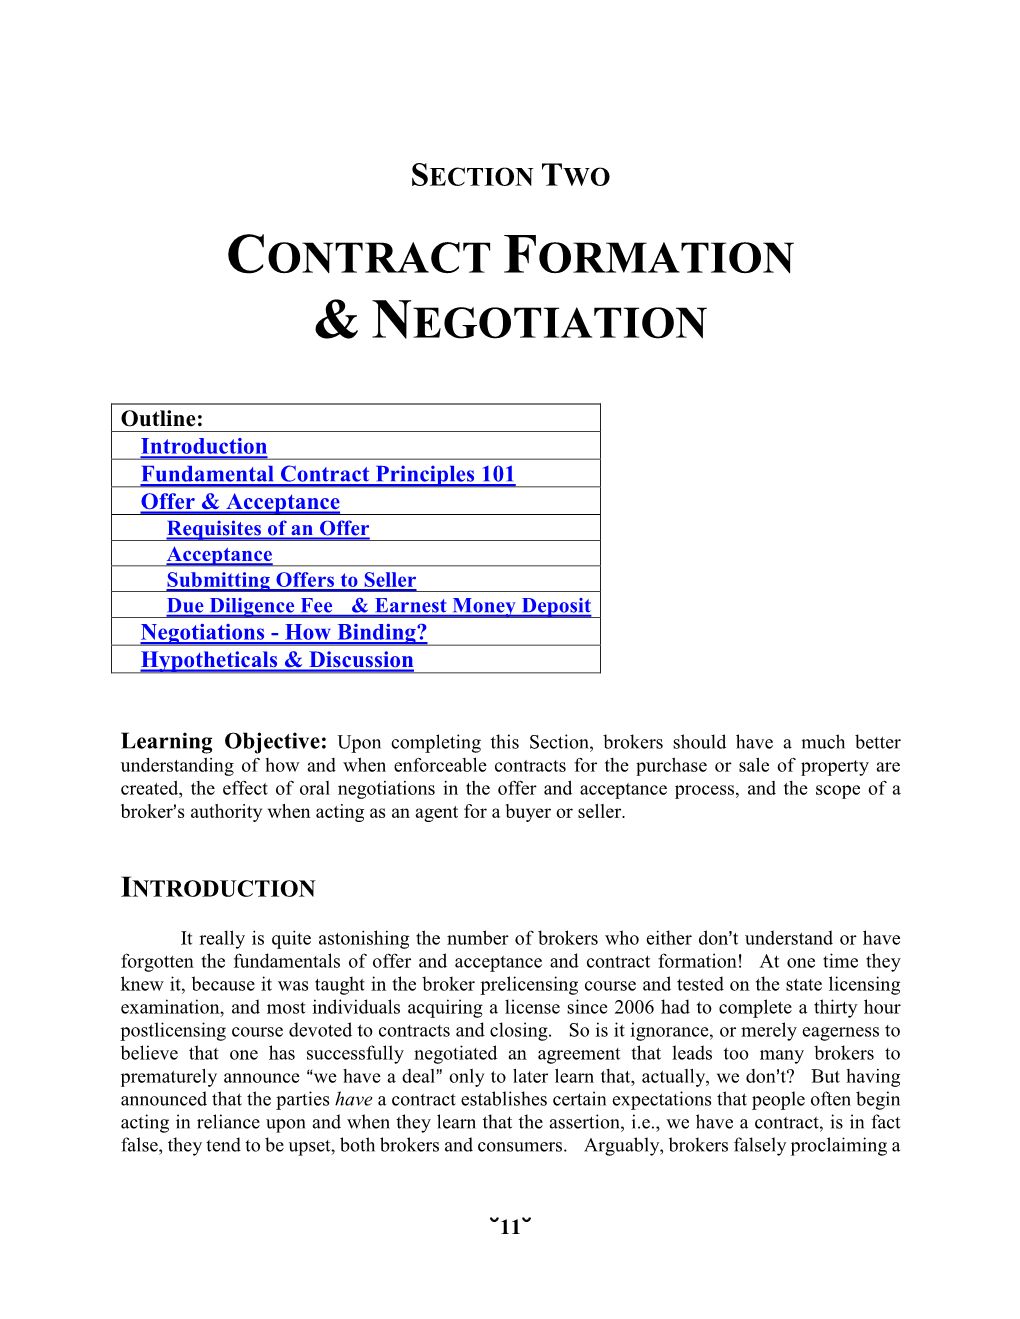 Contract Formation & Negotiation